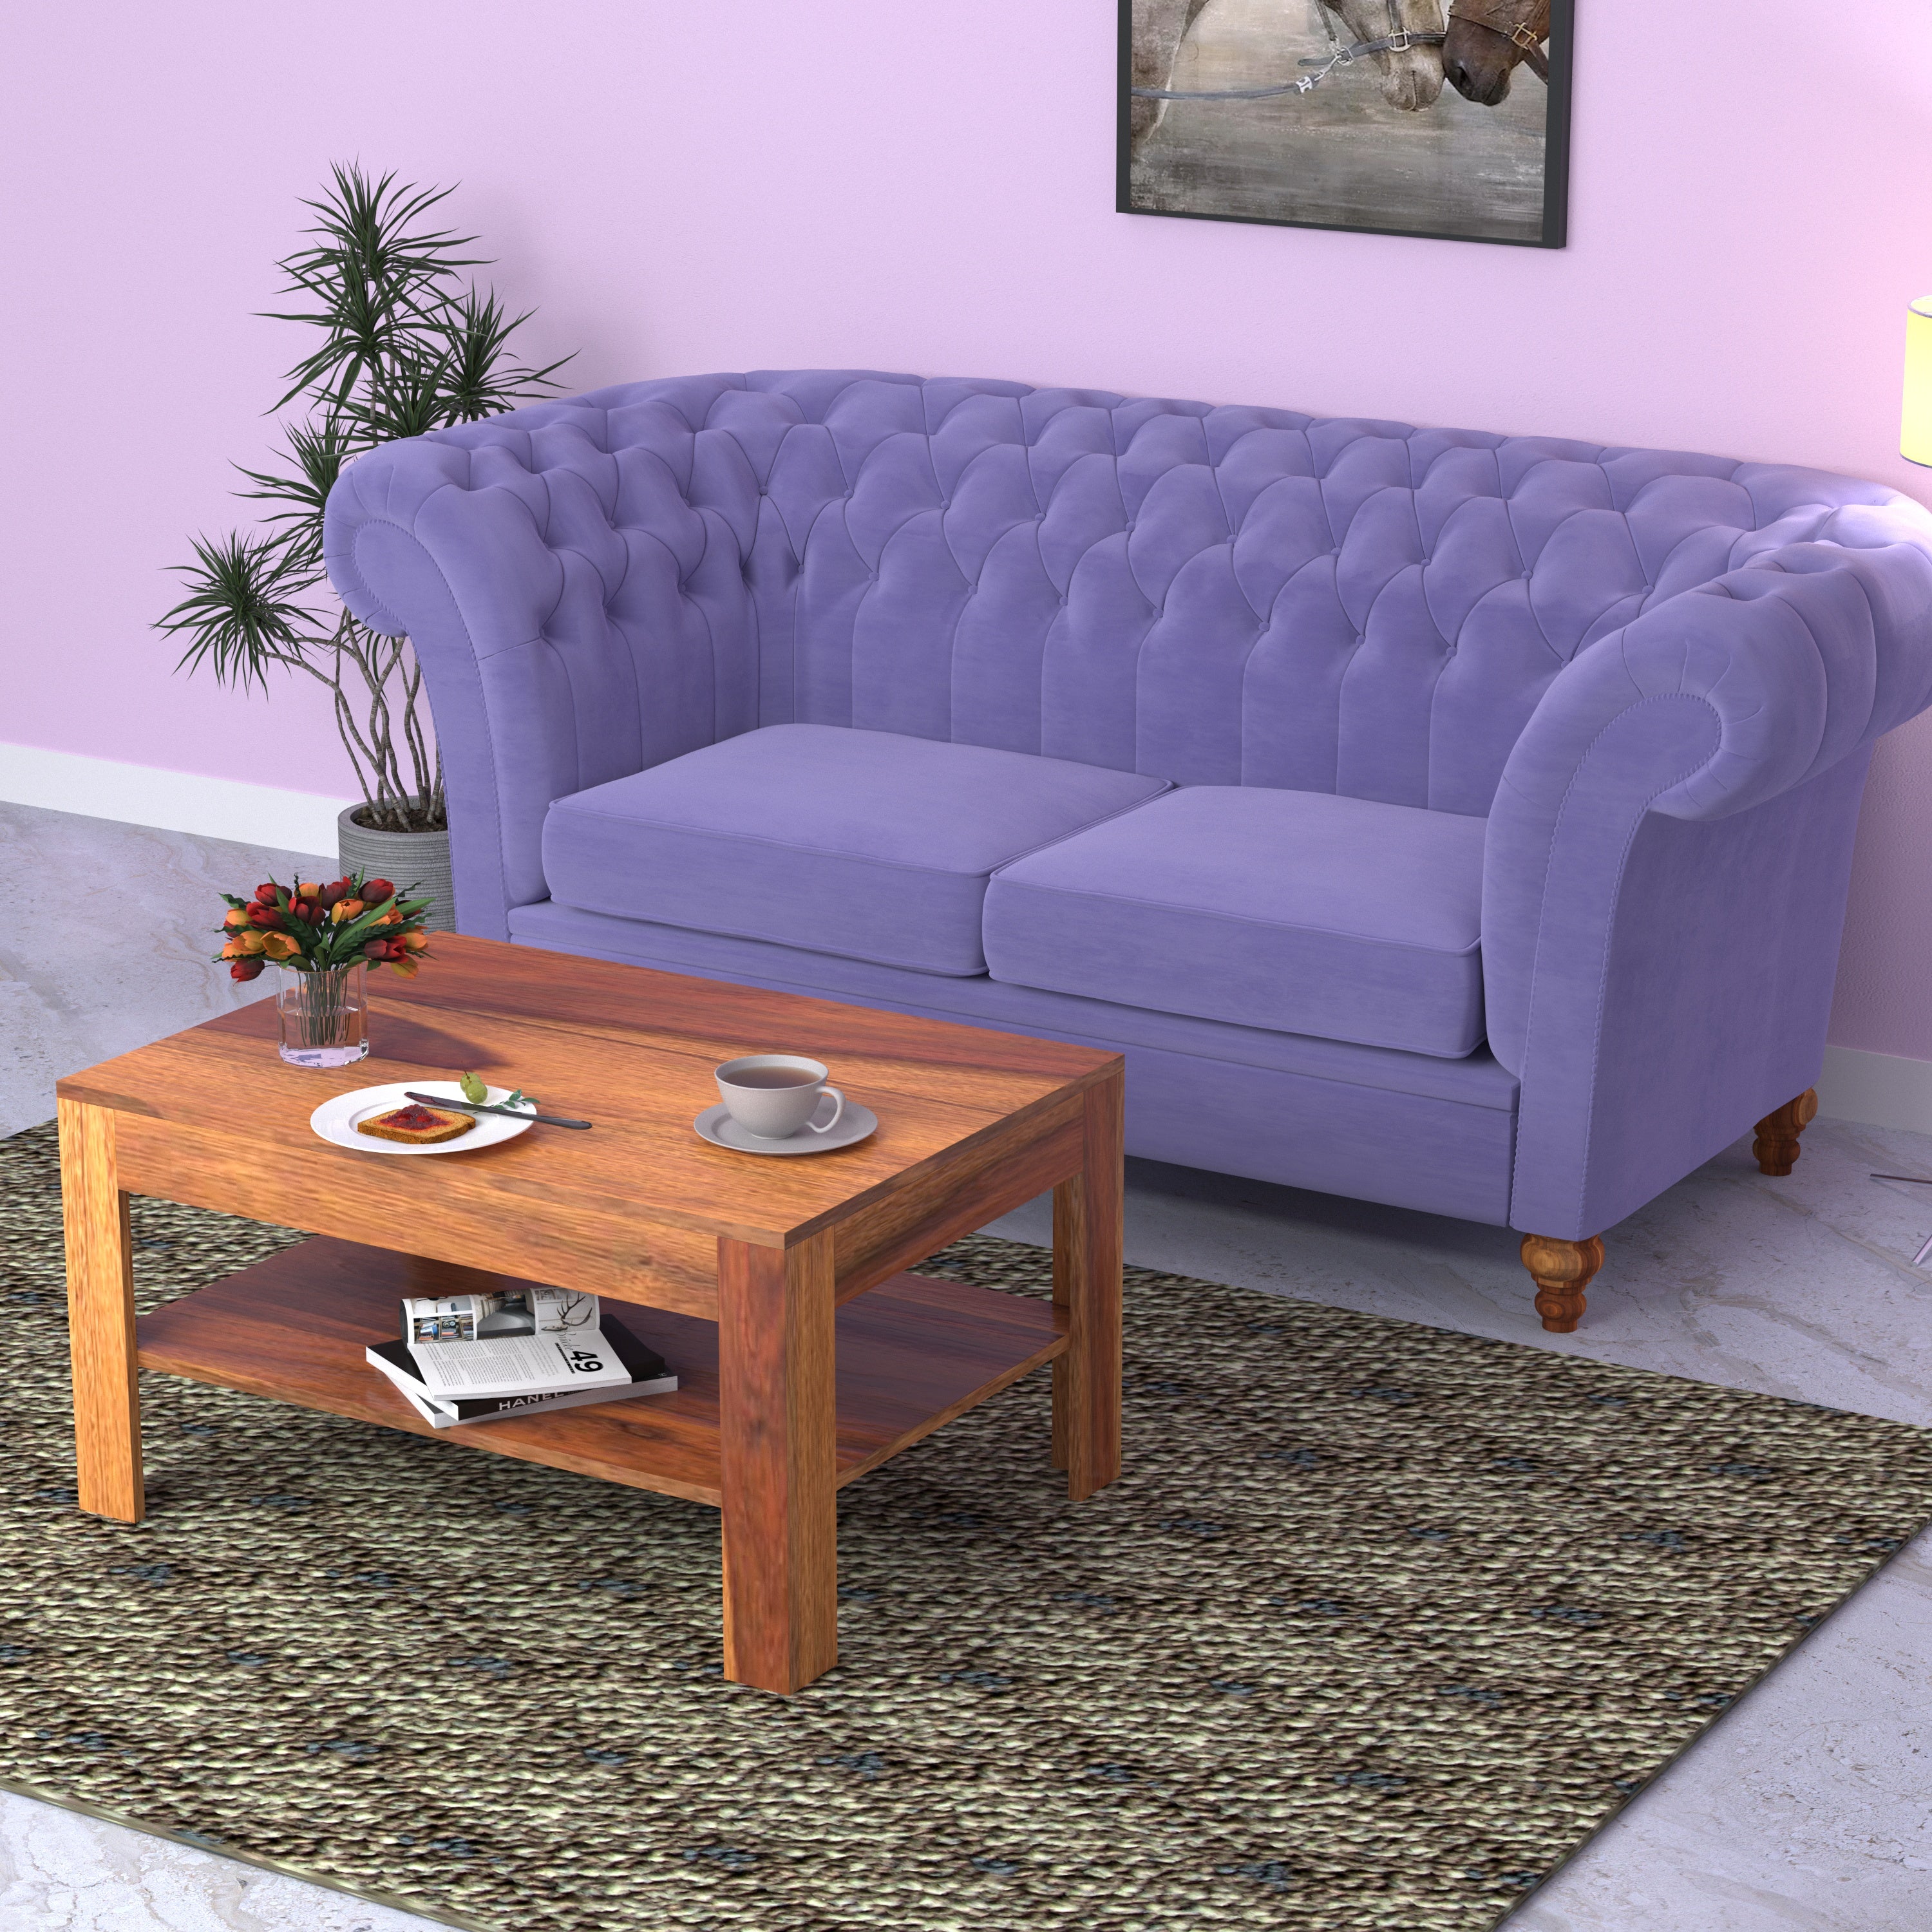 Crimson Purple Pastel Coloured Comfort Large 2 Seater Sofa + Center Table for Home Sofa